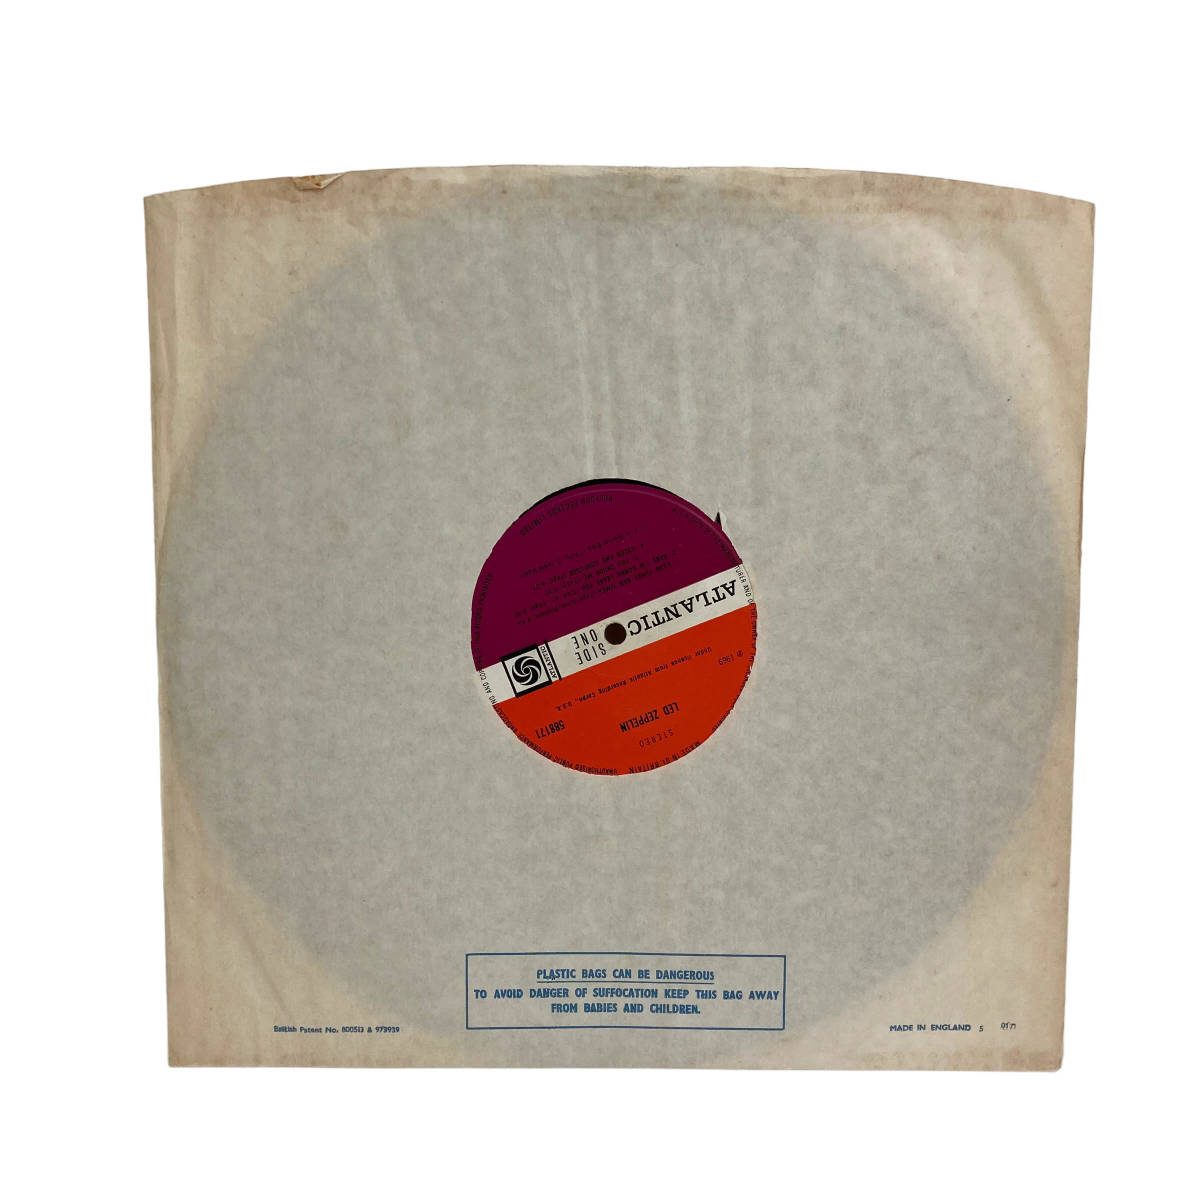 UK盤 Led Zeppelin UK '69 Atlantic 588171 Warner Bros./7 Arts . Jewel Music' in two lines (labels) レコード LP オリジナル_画像3